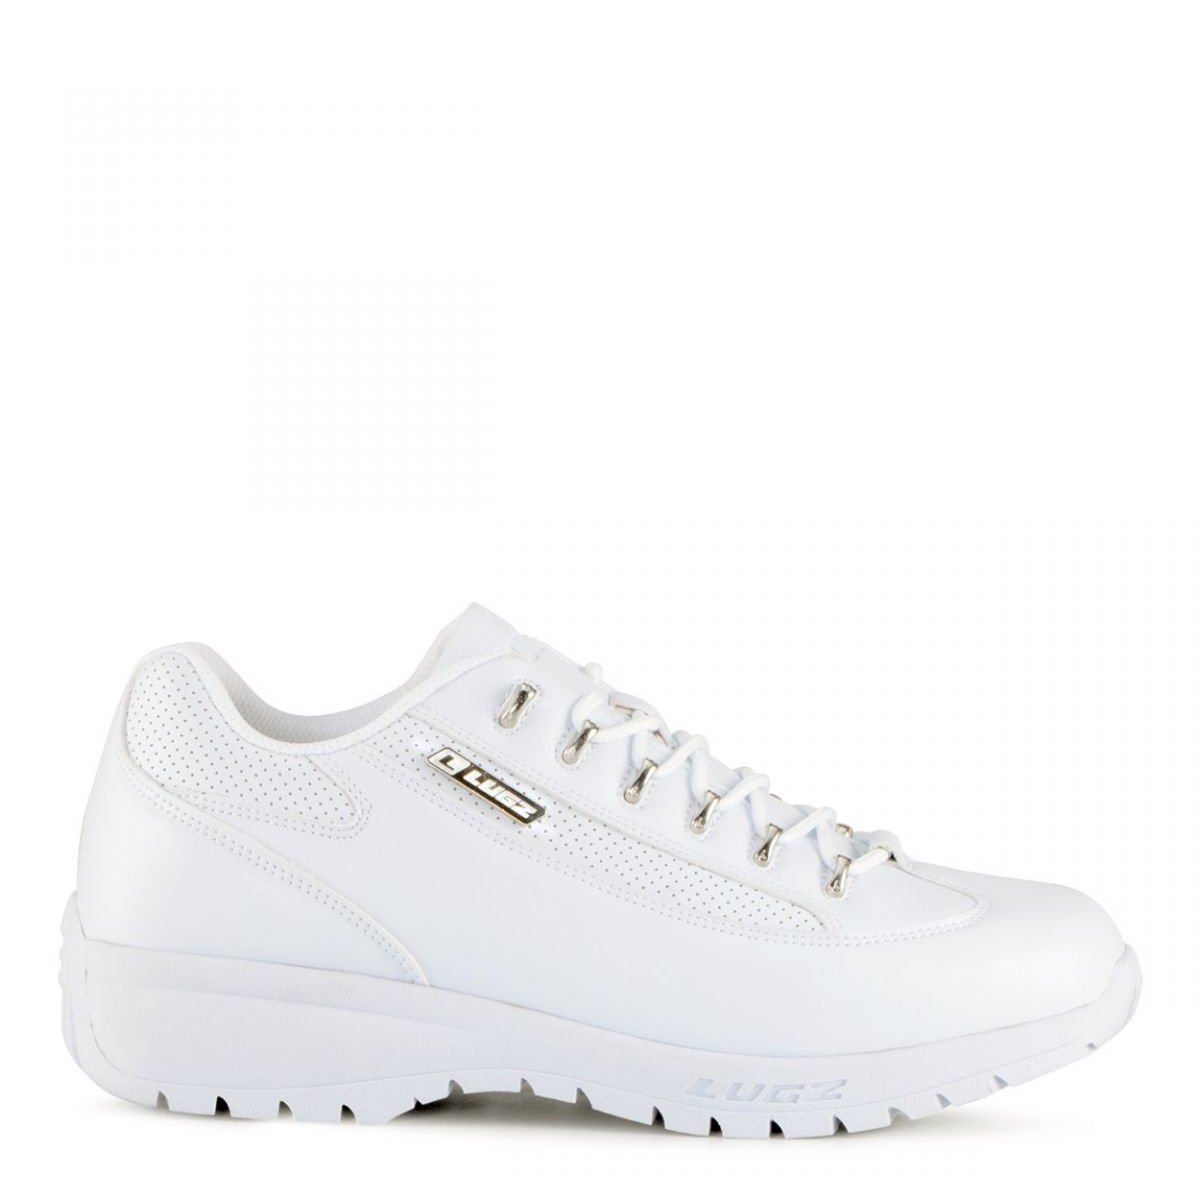 Lugz Men's Express Sneaker White - MEXPRSPV-100 WHITE - WHITE, 9